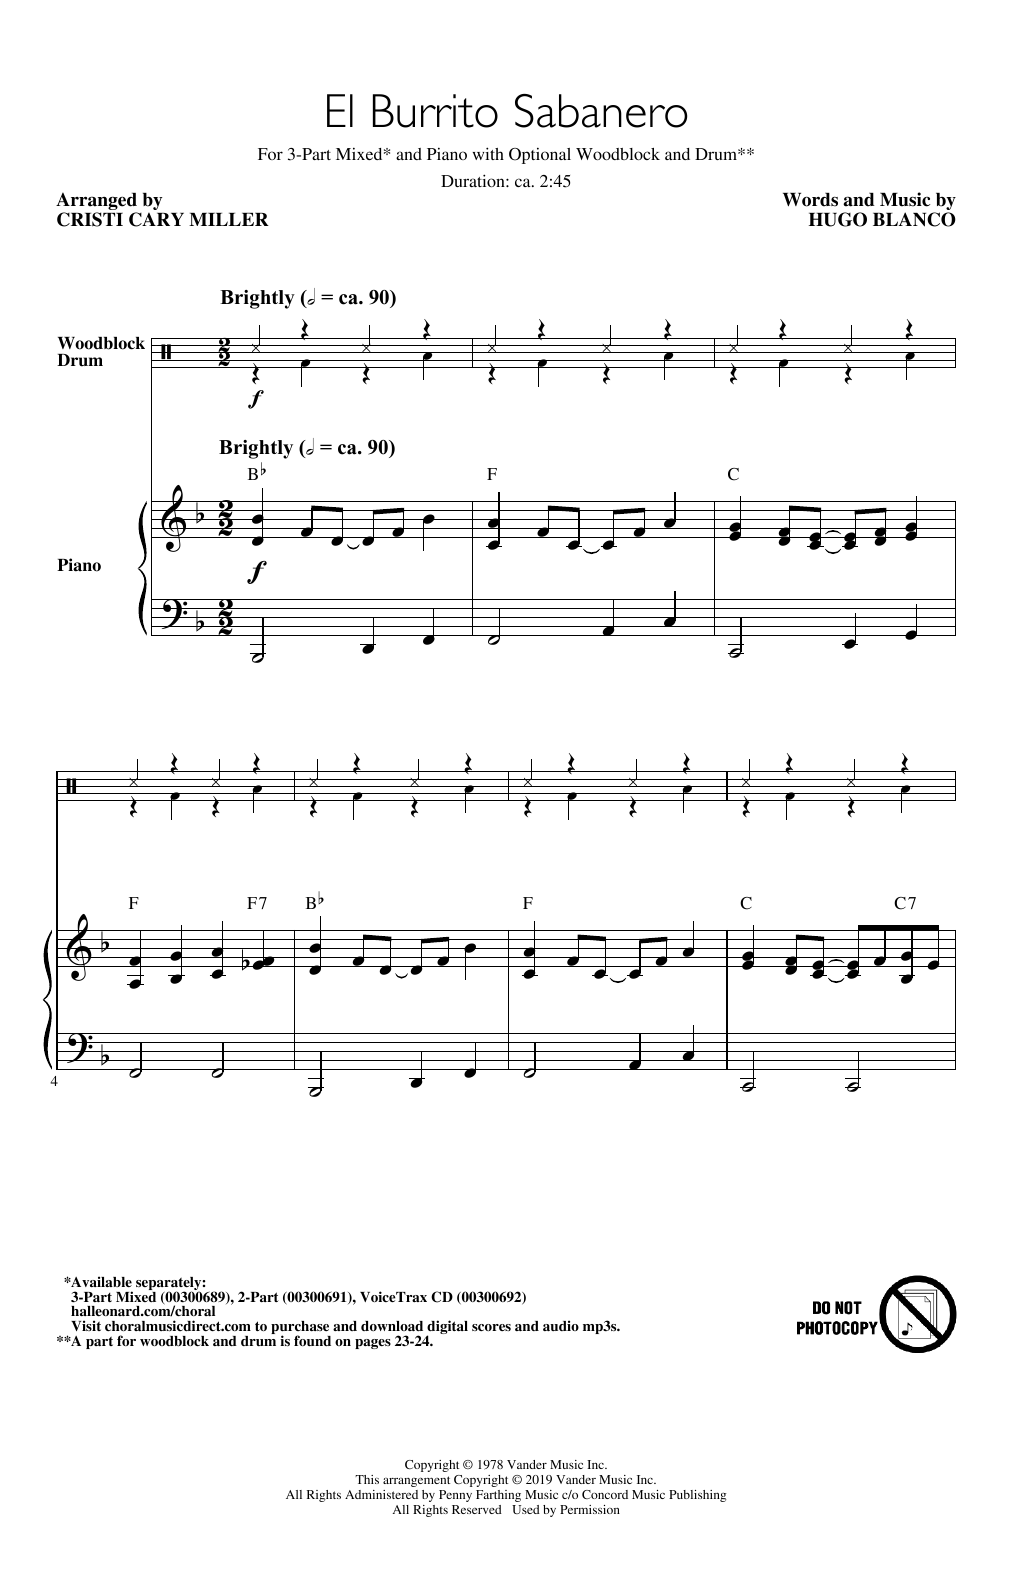 Download Hugo Blanco El Burrito Sabanero (Mi Burrito Sabanero) (arr. Cristi Cary Miller) Sheet Music and learn how to play 3-Part Mixed Choir PDF digital score in minutes